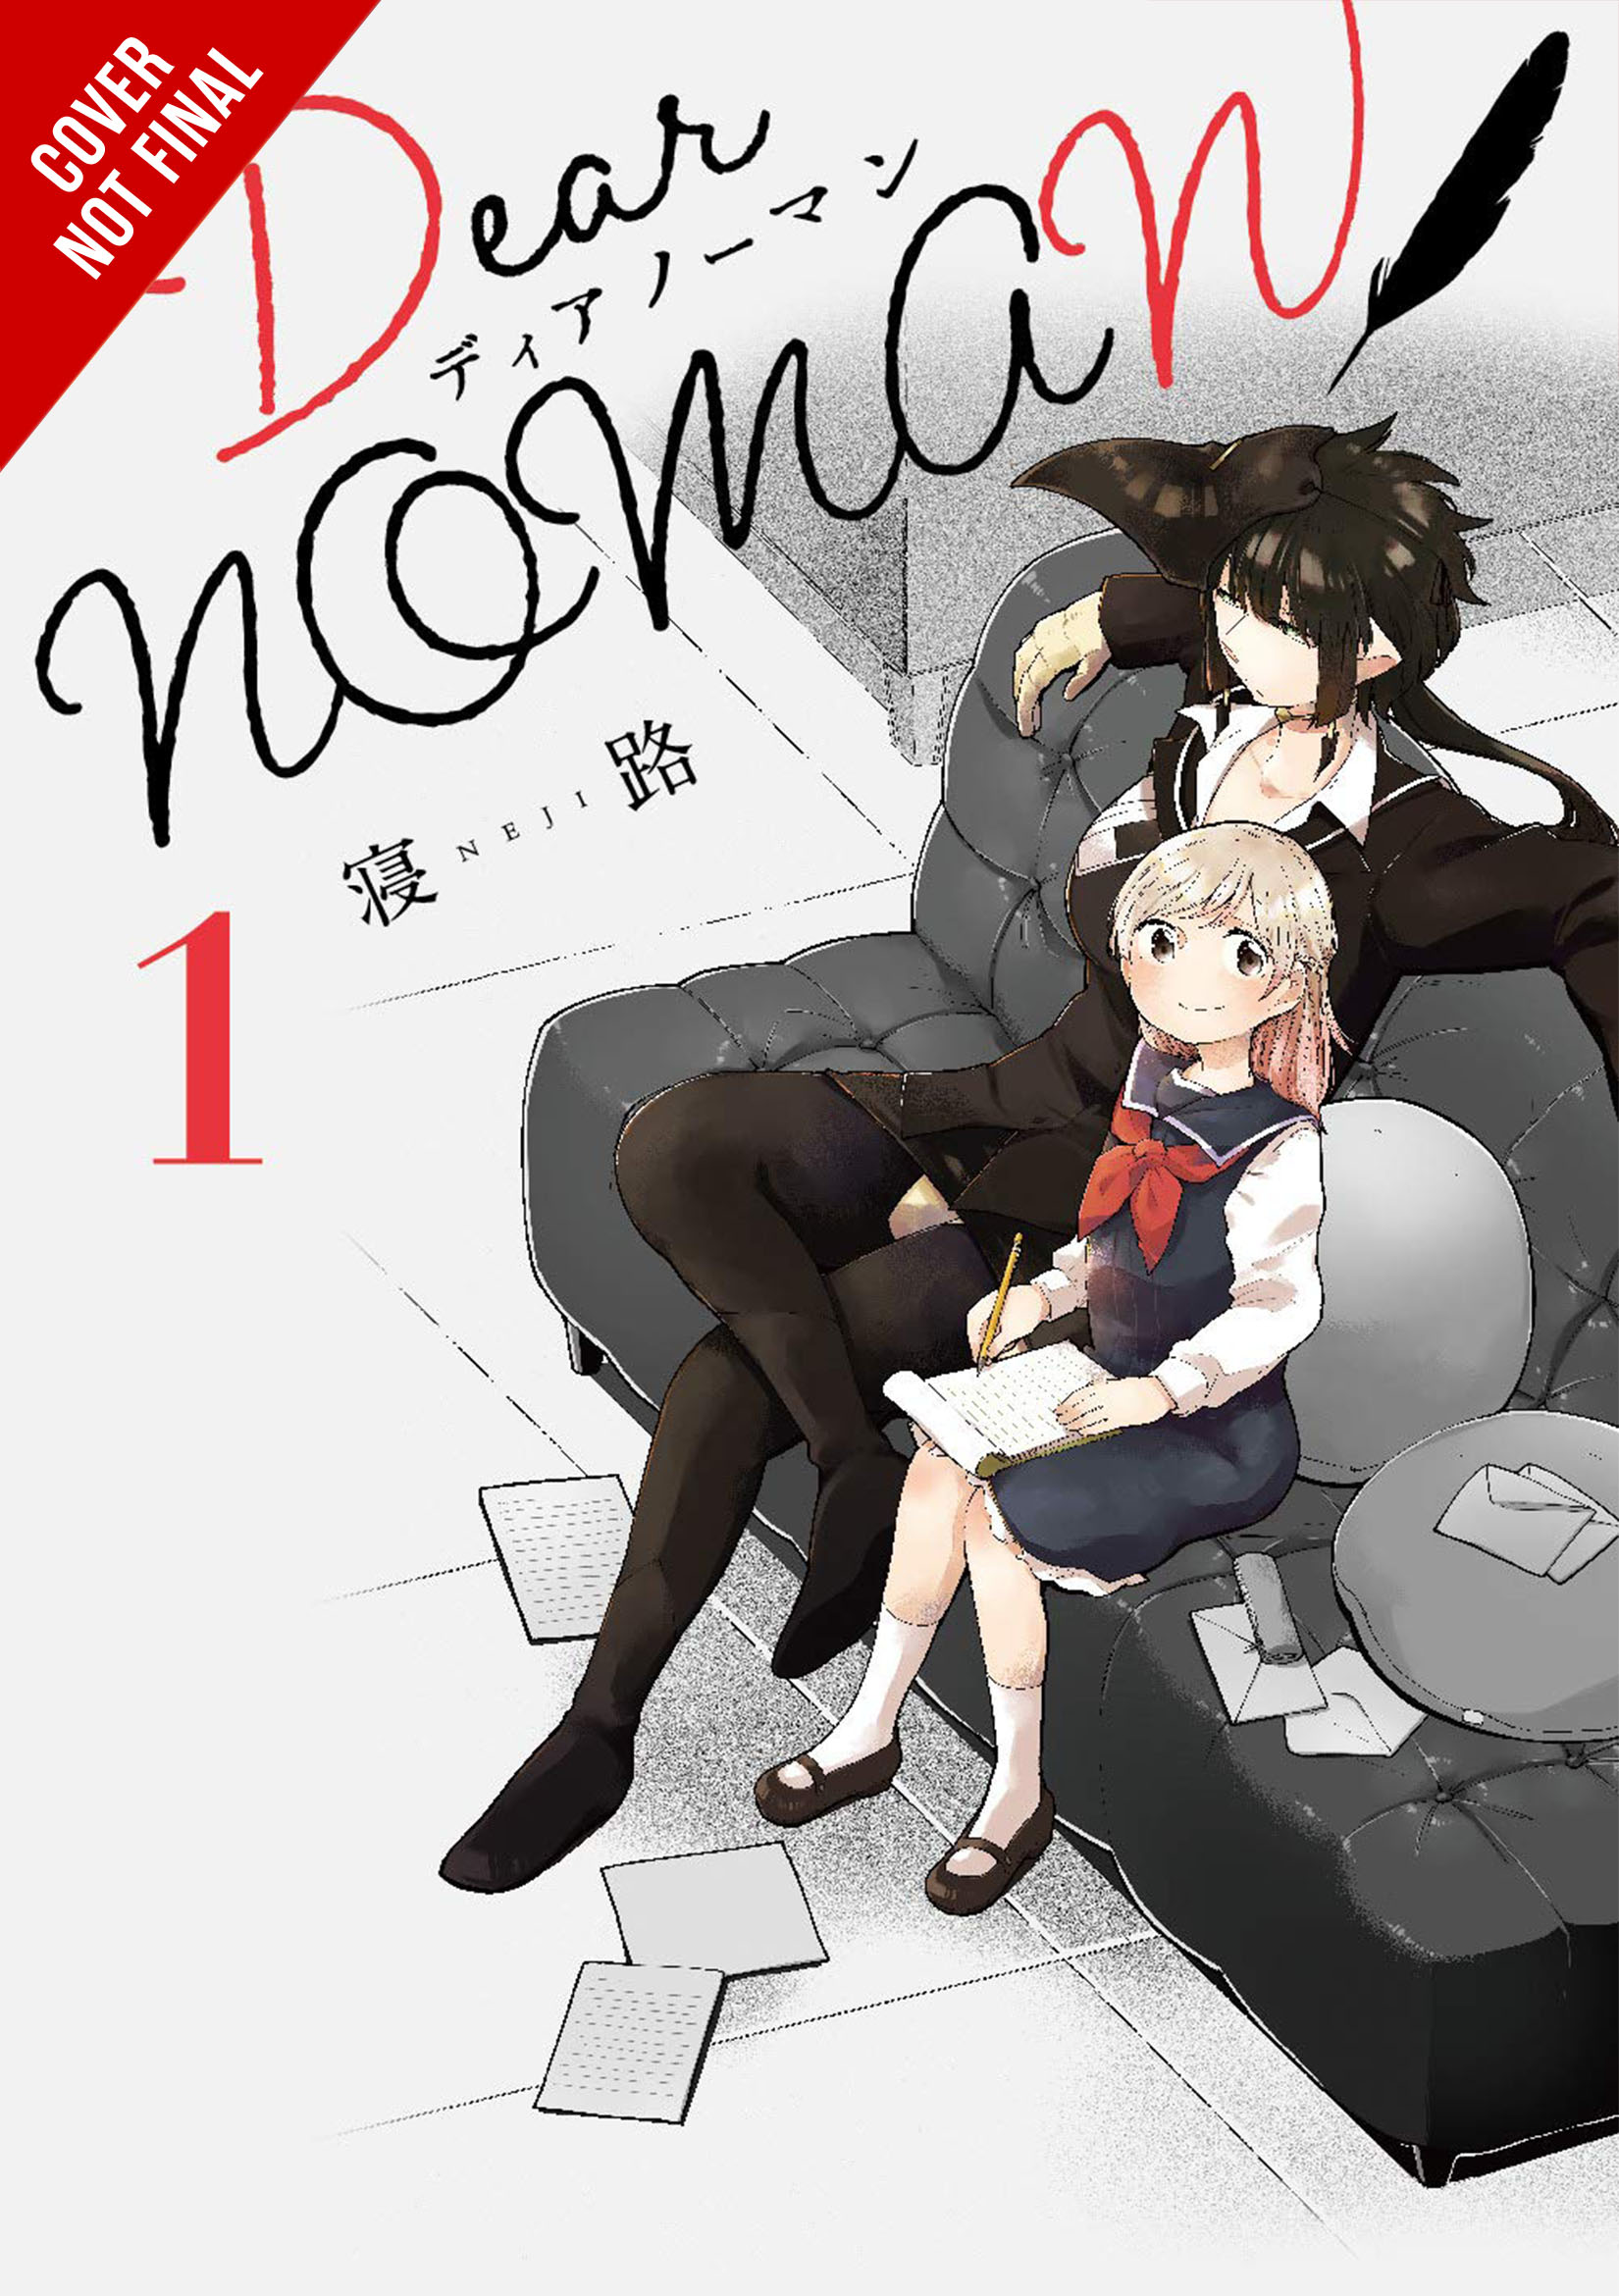 Adachi and Shimamura Official Comic Anthology Japanese Language Manga Book  Comic